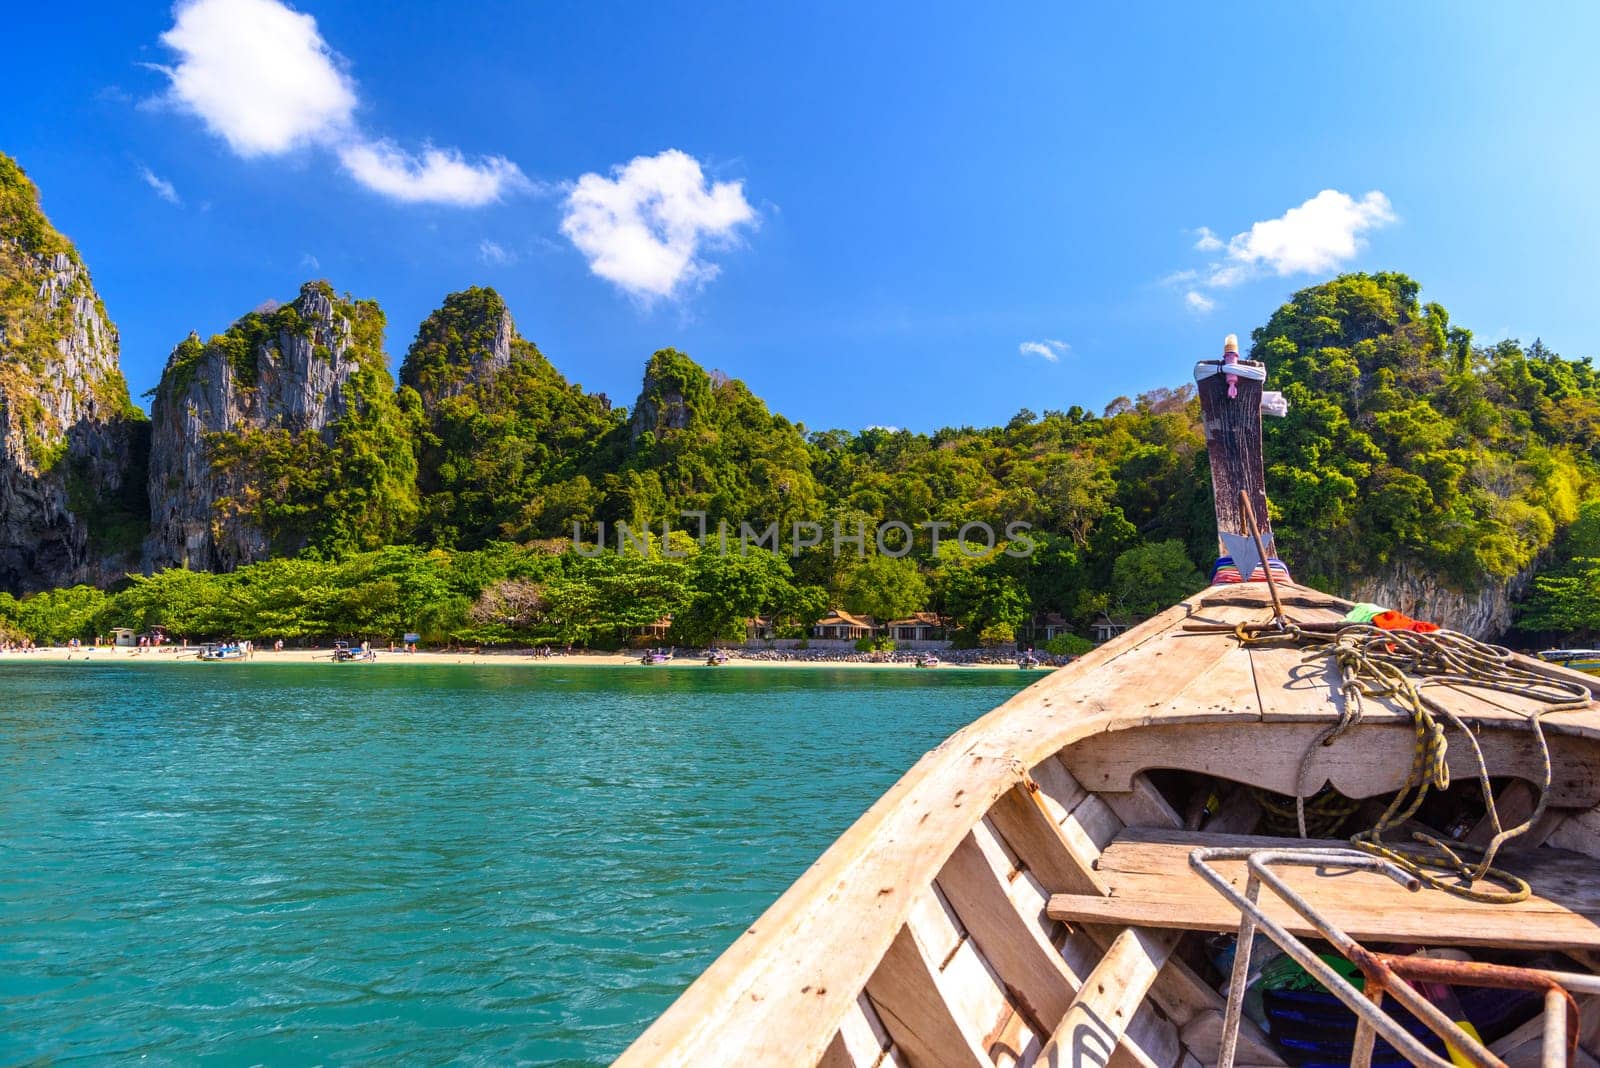 Boat bow in the sea near Ao Phra Nang Beach, Ao Nang, Krabi, Thailand by Eagle2308